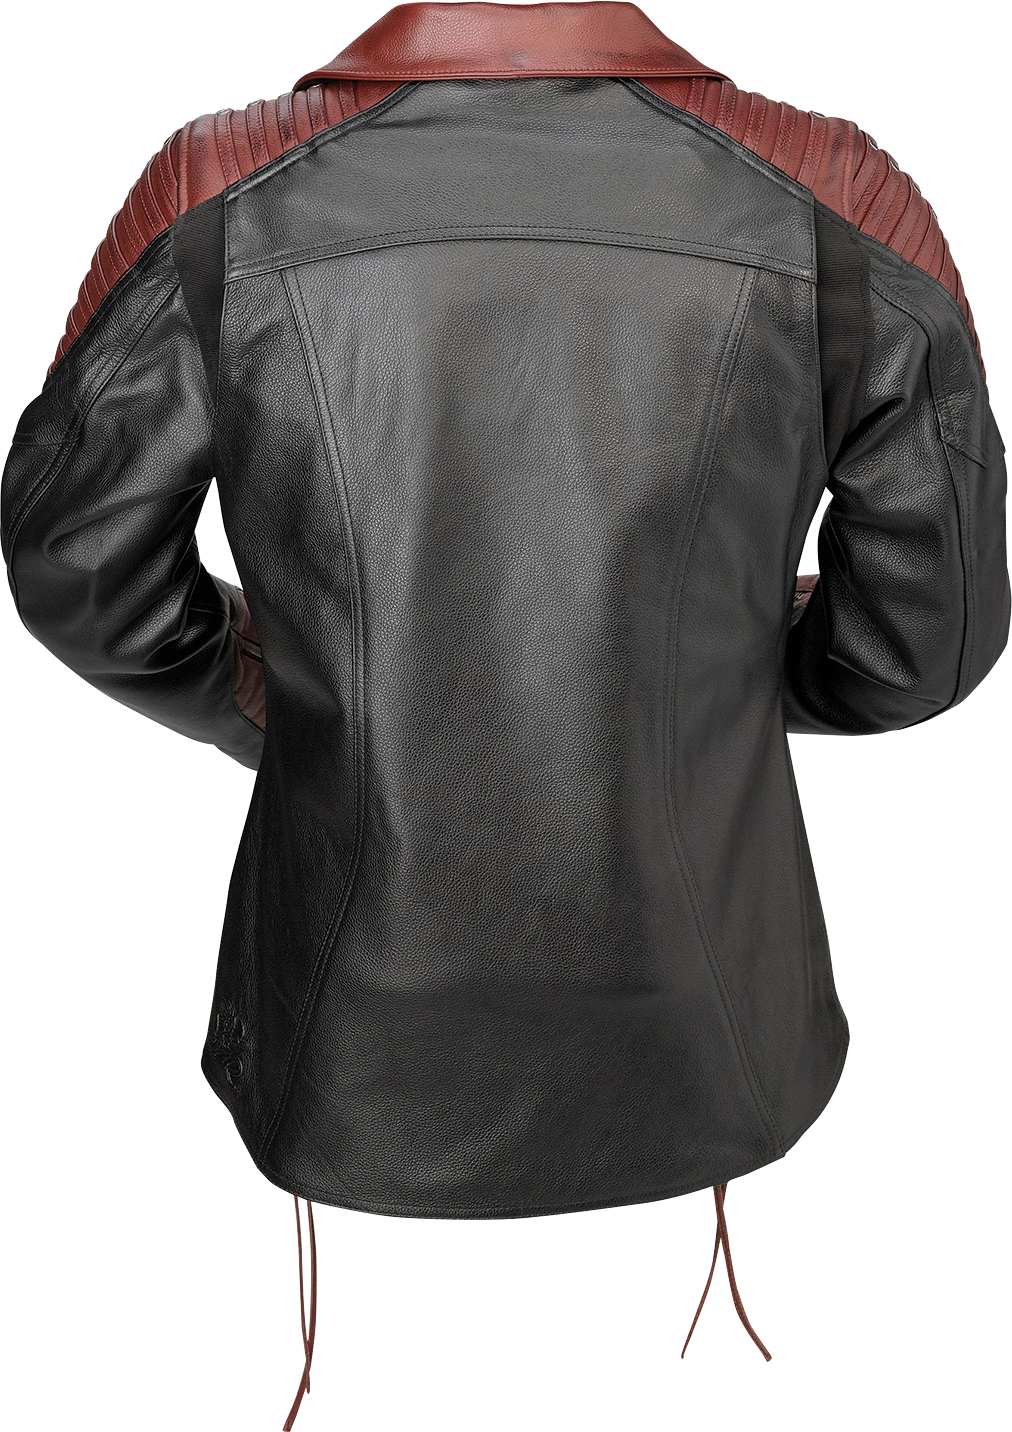 Womens Combiner Leather Jacket - Black/Red - 3W - Lutzka's Garage